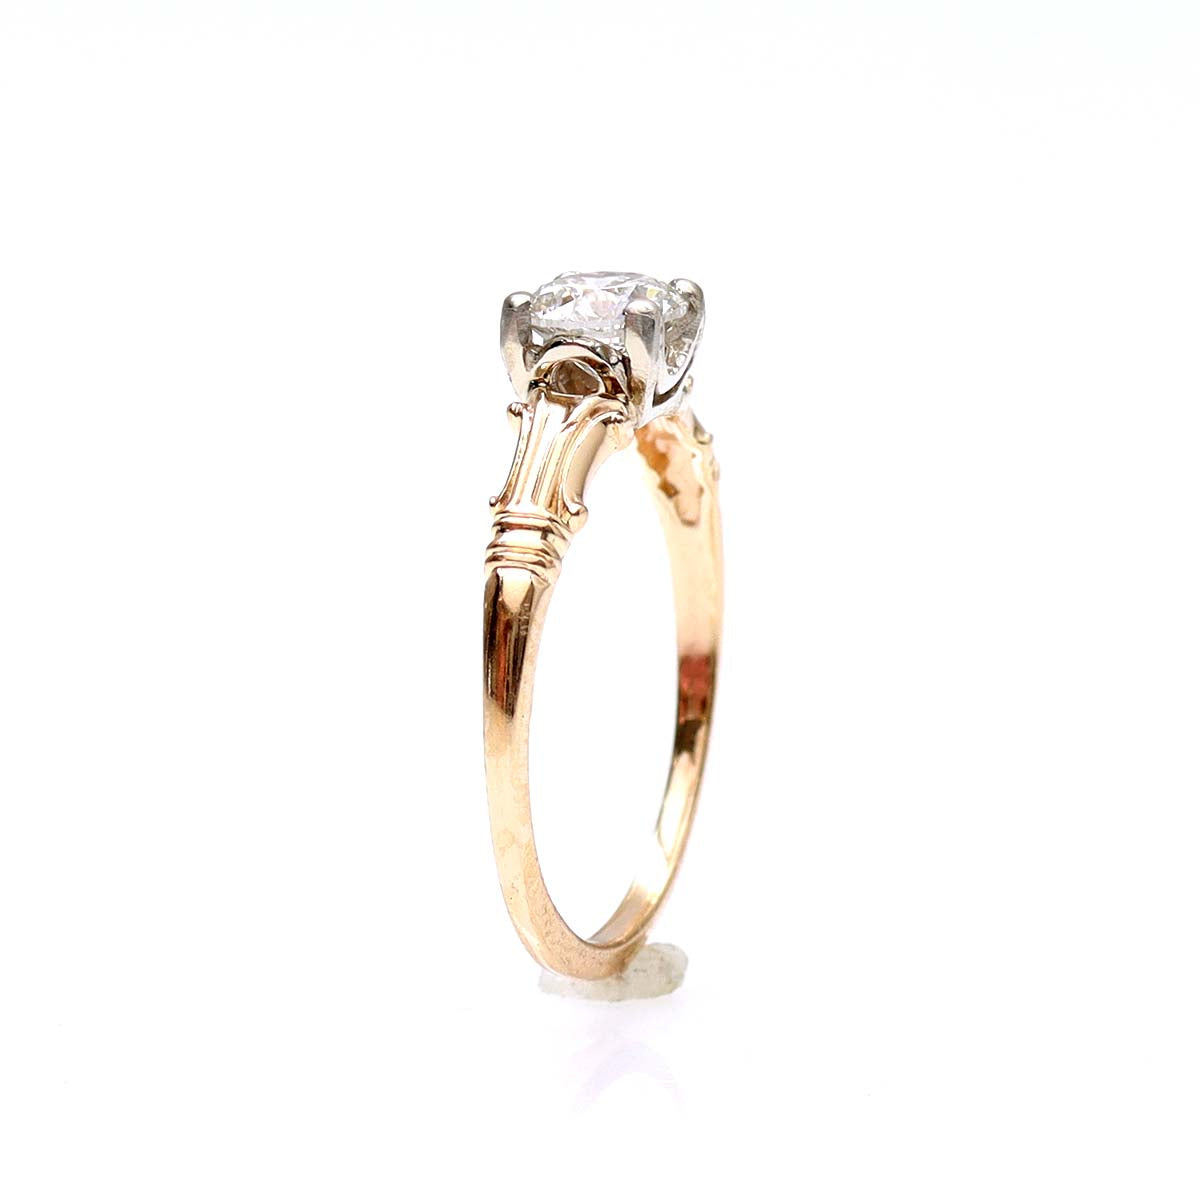 Replica Art Déco Engagement Ring #2591-8